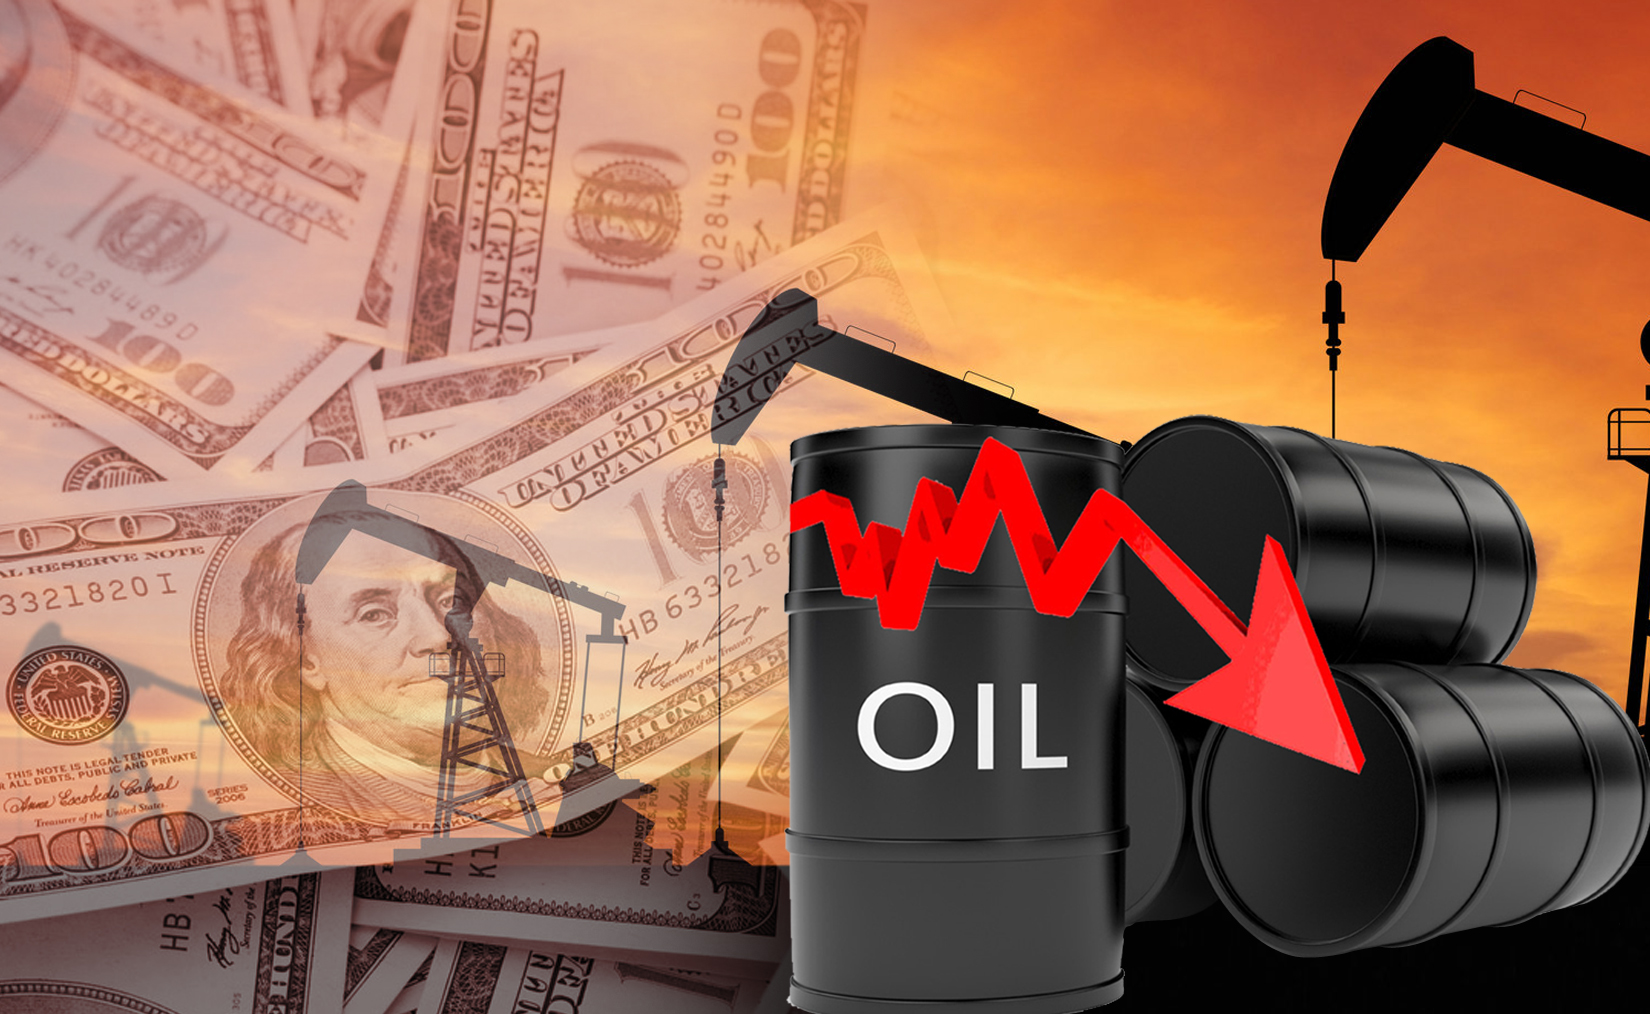 Kuwait oil price down 98 cents to USD 66.76 pb                                                                                                                                                                                                            